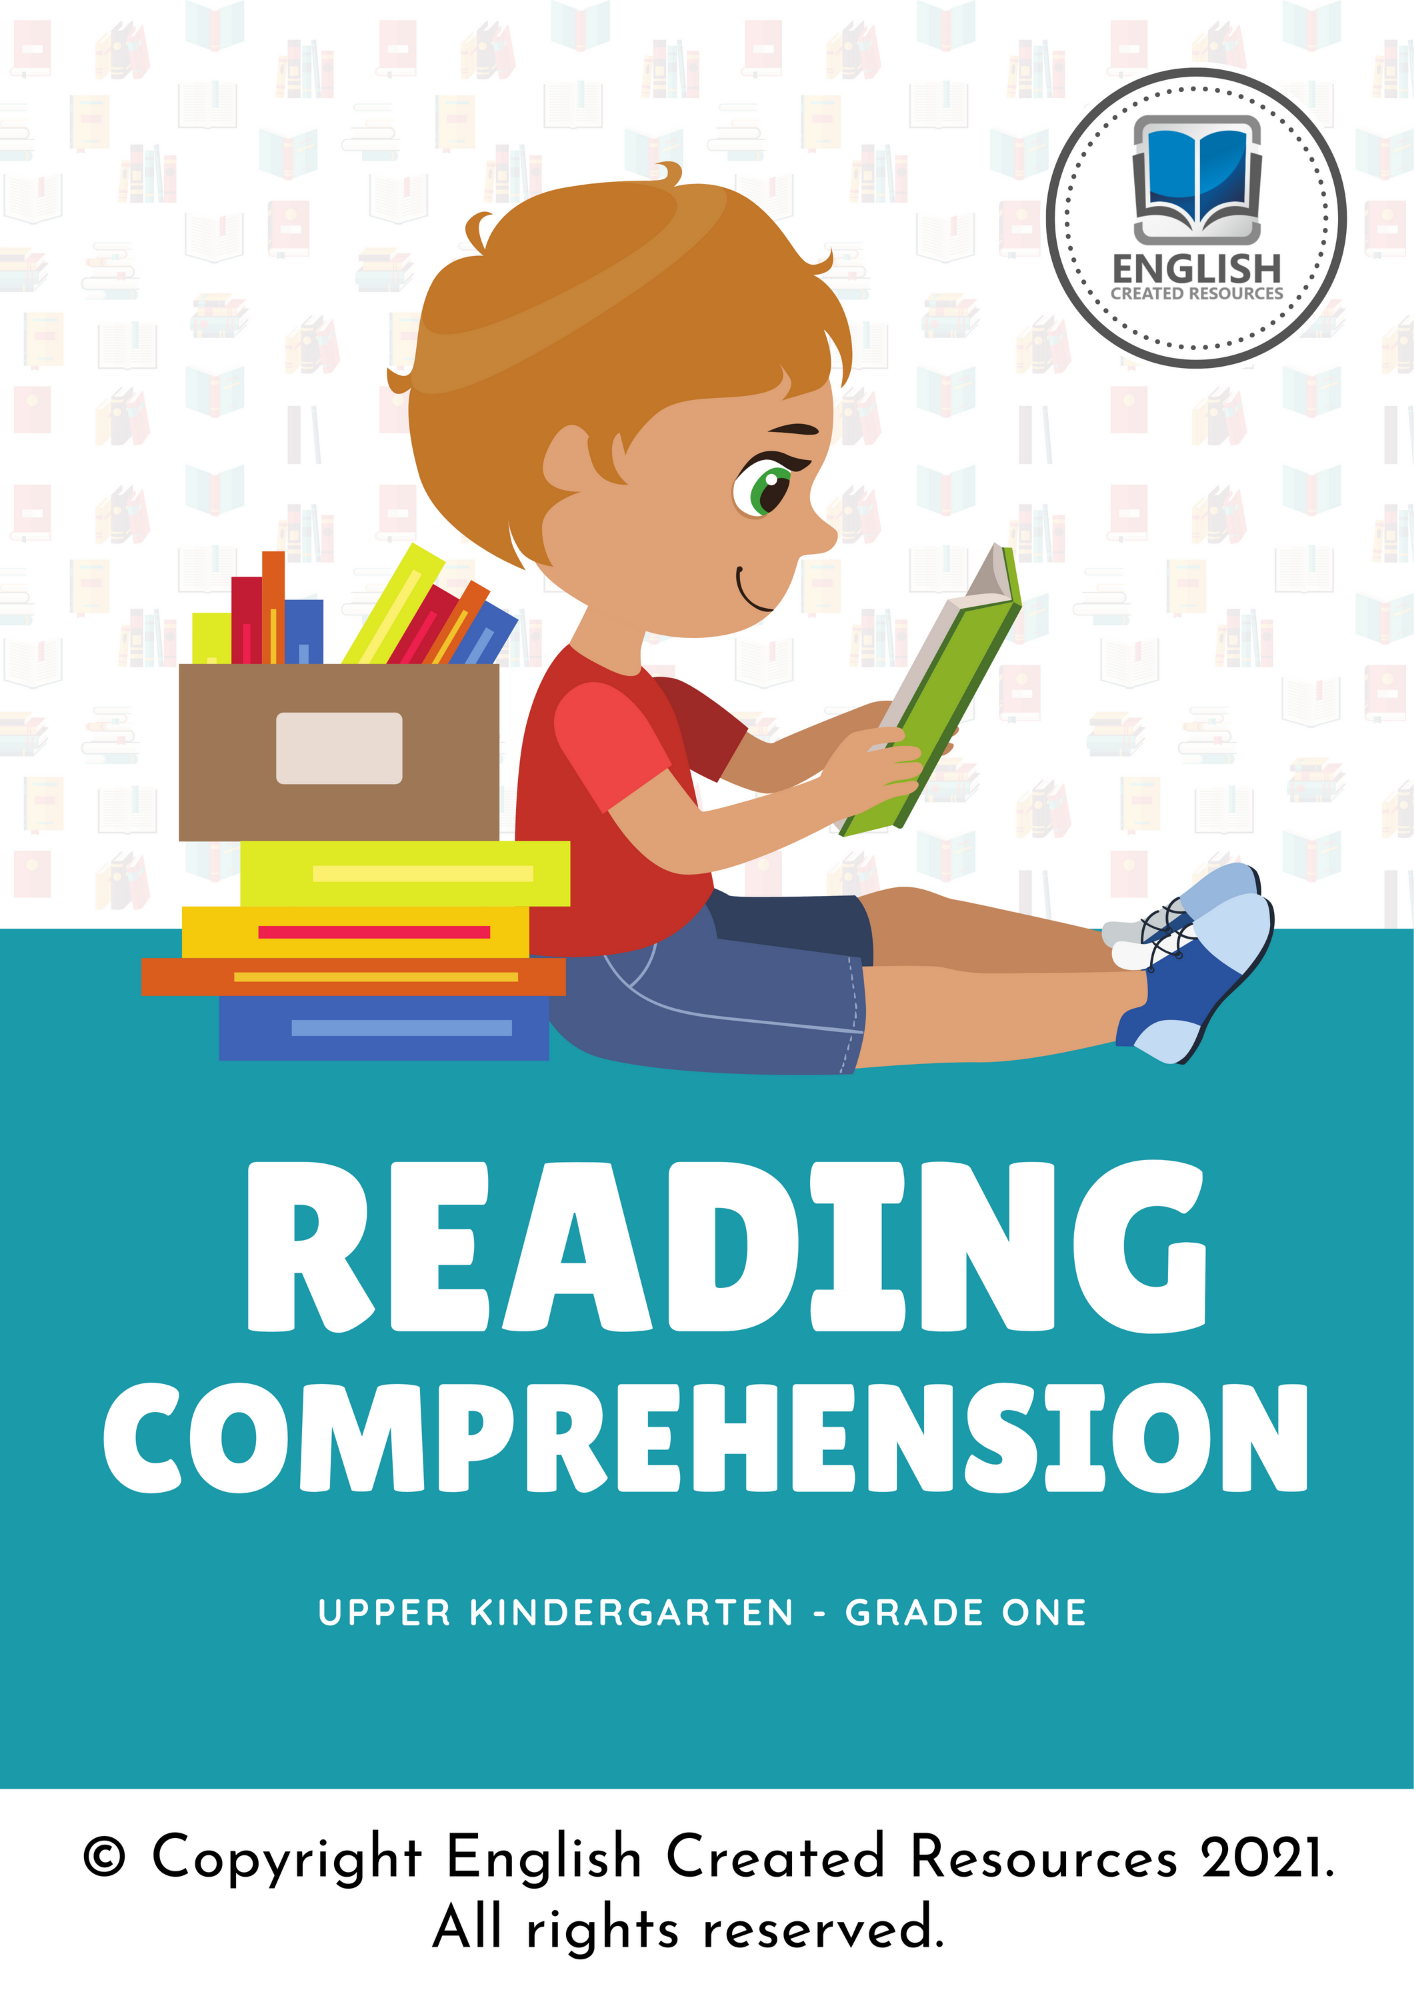 Kindergarten Reading Comprehension - English Created Resources